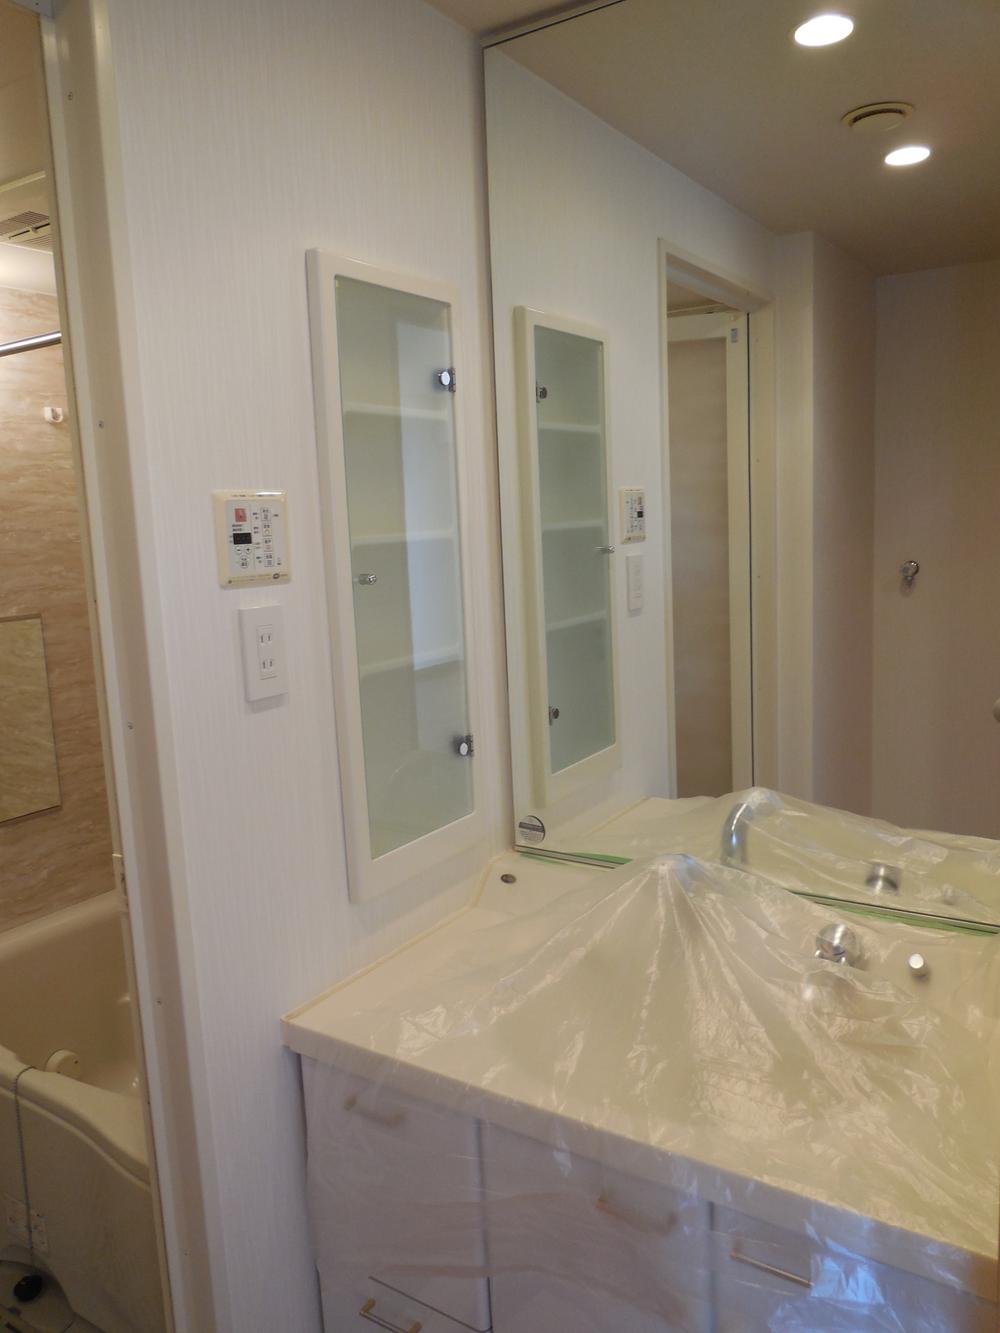 Wash basin, toilet. Shampoo dresser of a large mirror